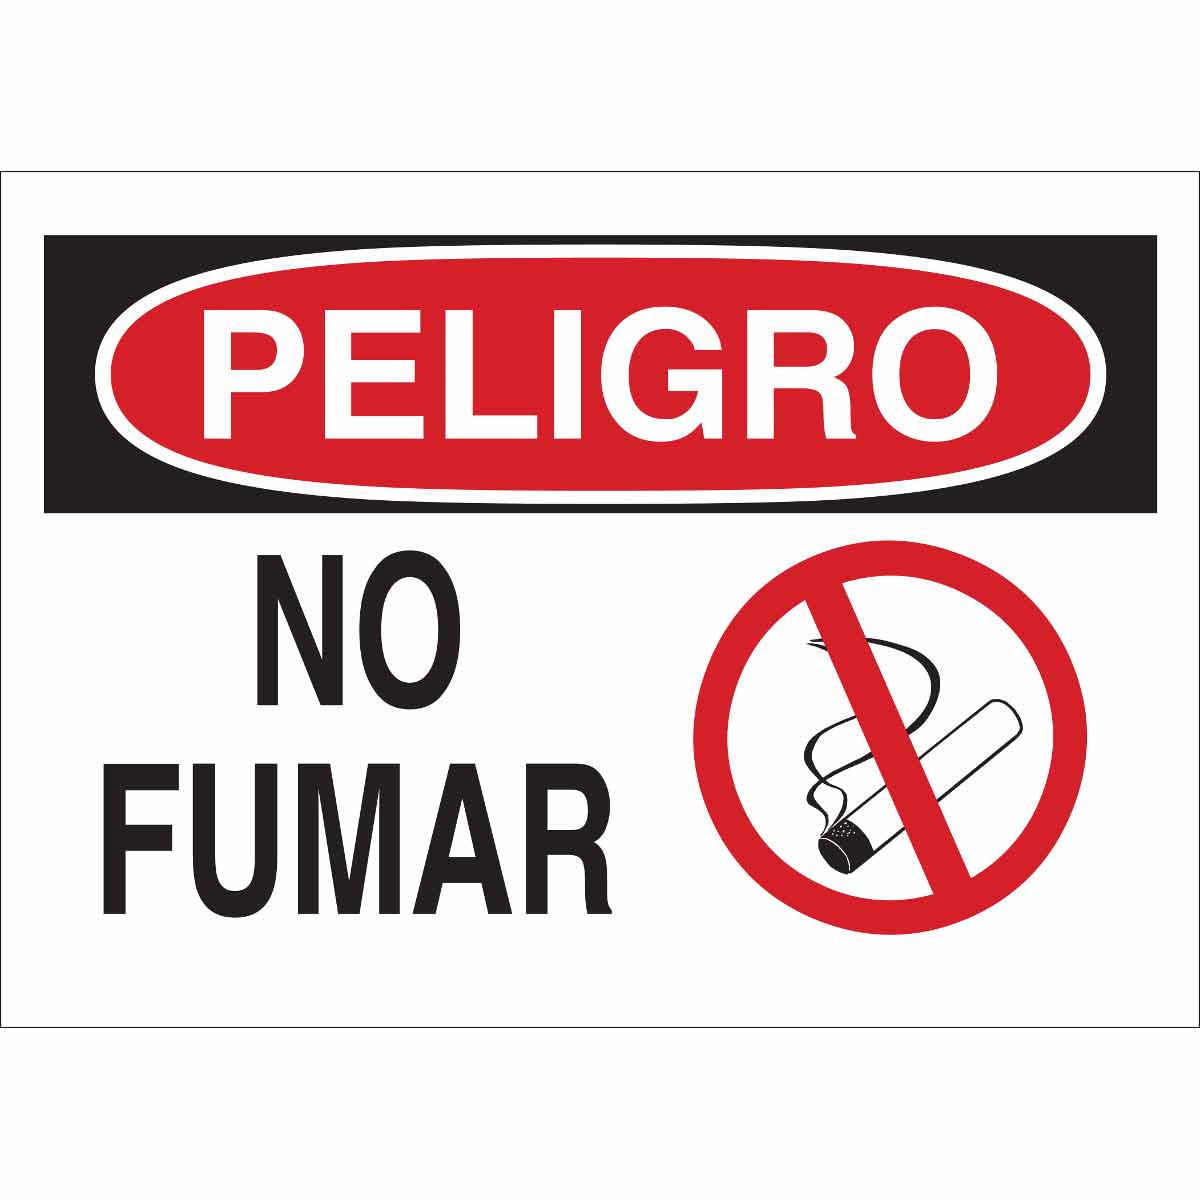 GRACIAS POR NO FUMAR - Safetysignal